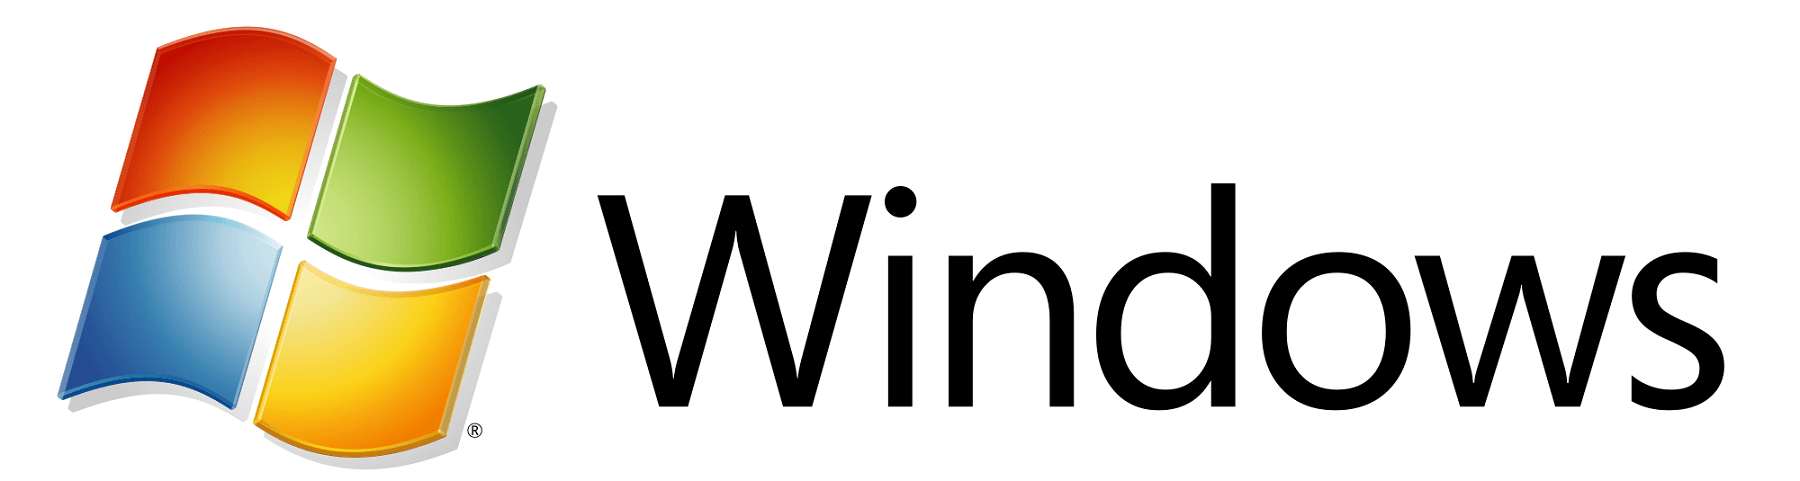 Download Windows 3.1x Logo in SVG Vector or PNG File Format - Logo.wine